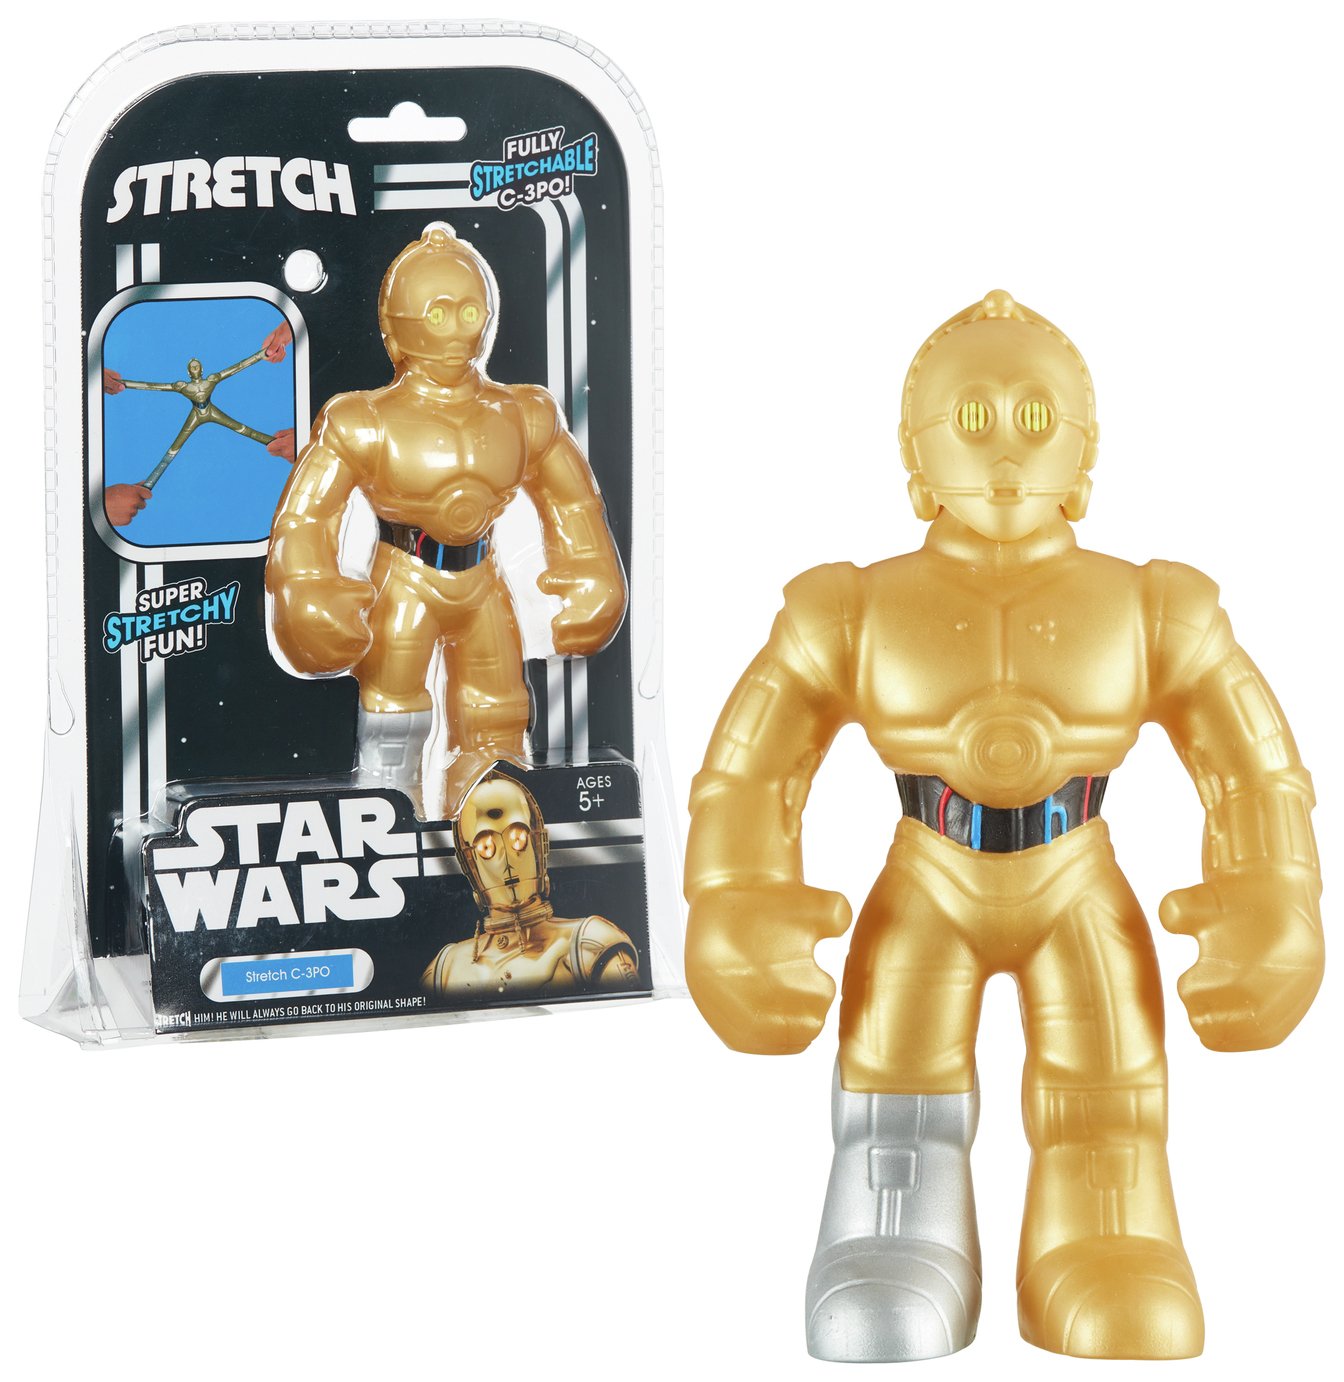 Stretch Star Wars C3PO Action Figure